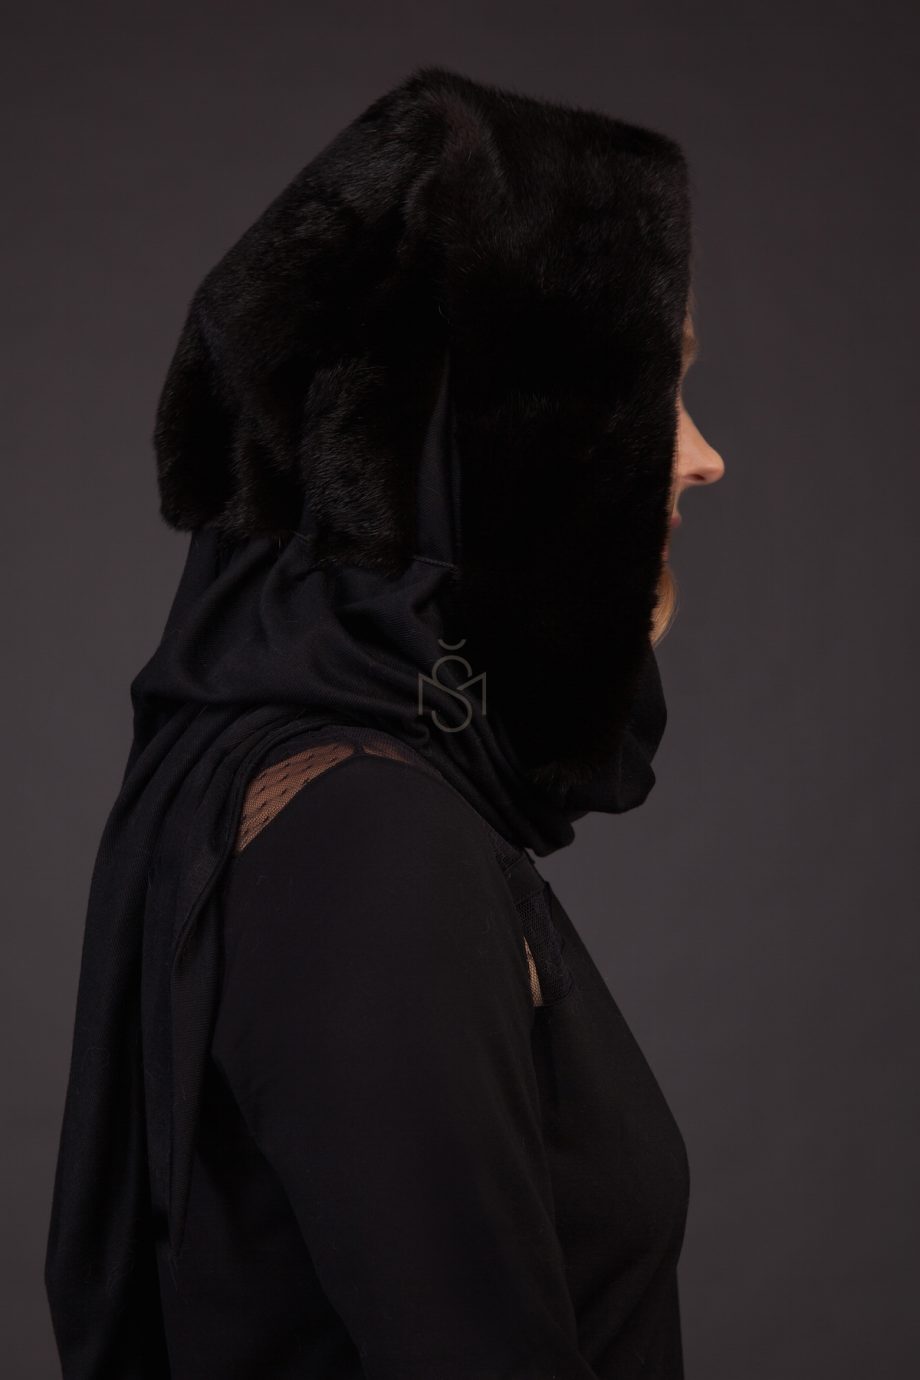 Mink fur shawl black color made by SILTA MADA fur studio in Vilnius